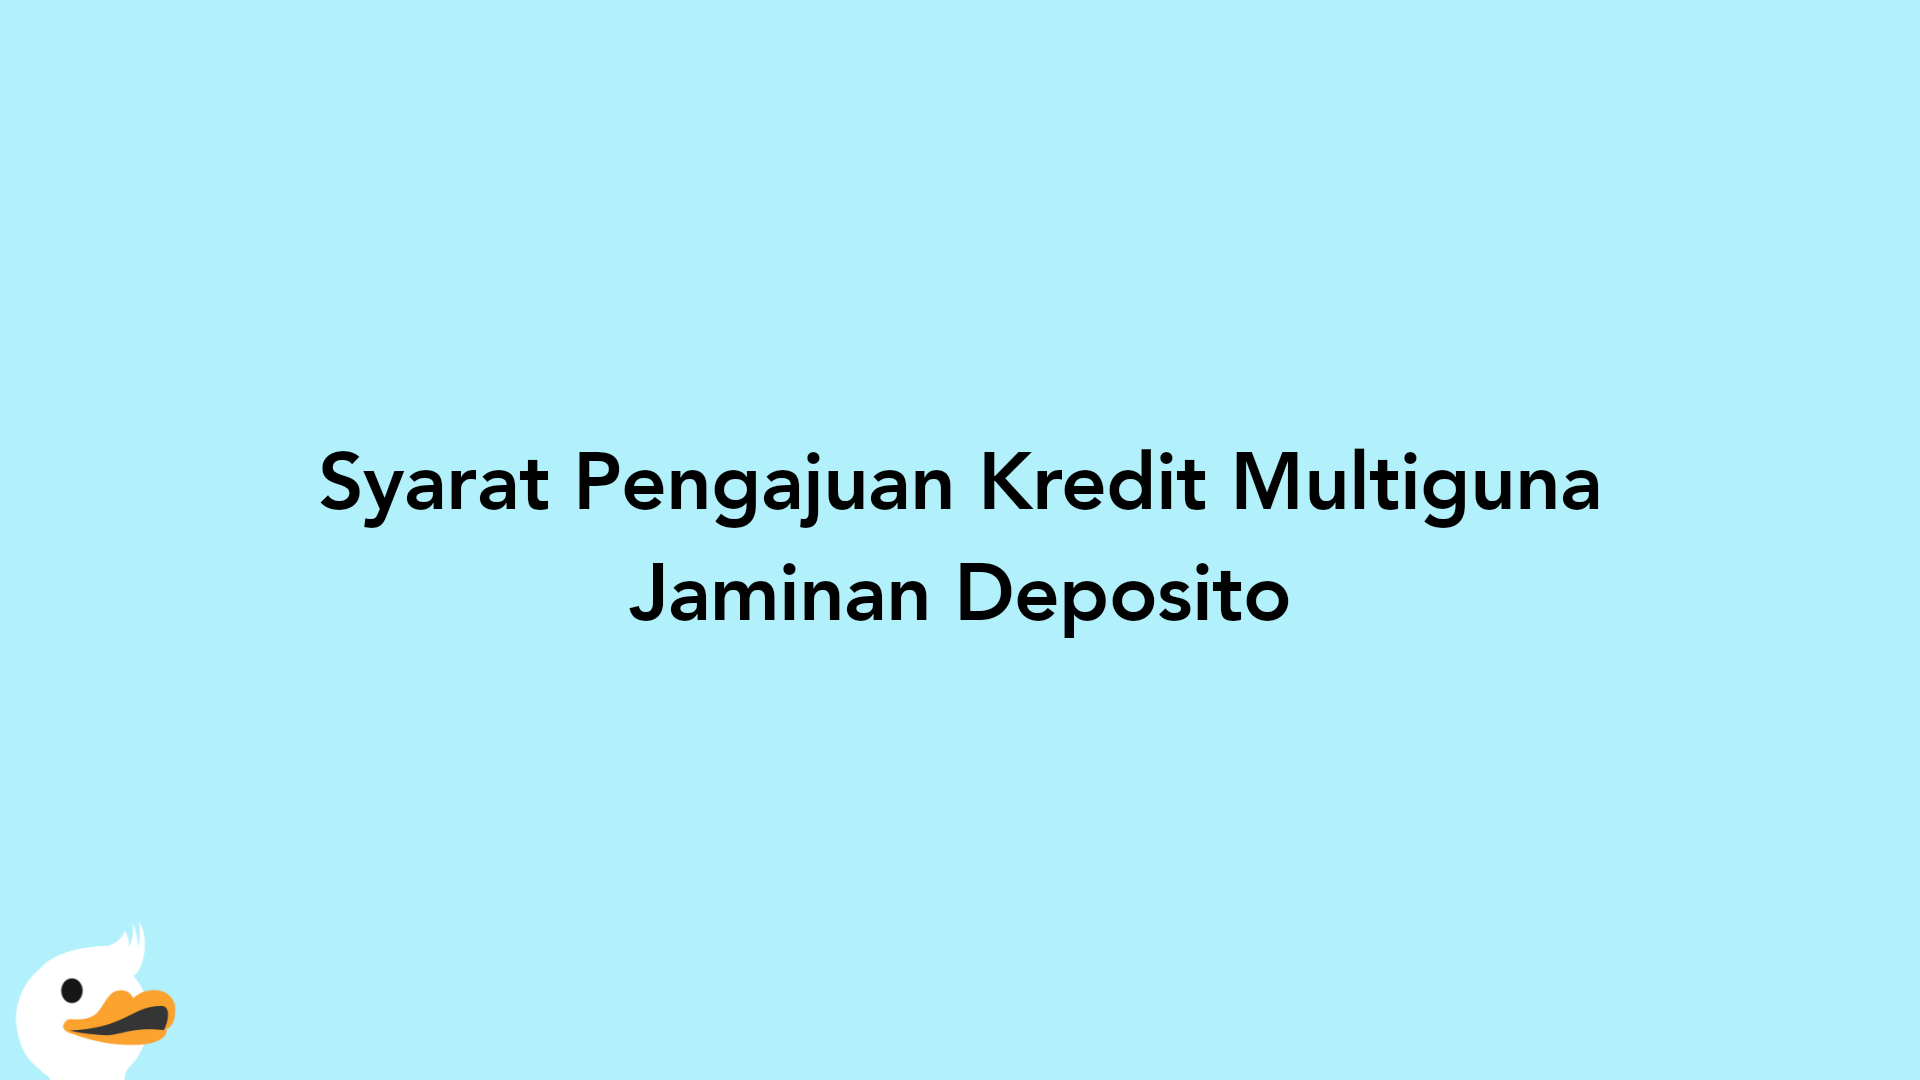 Syarat Pengajuan Kredit Multiguna Jaminan Deposito